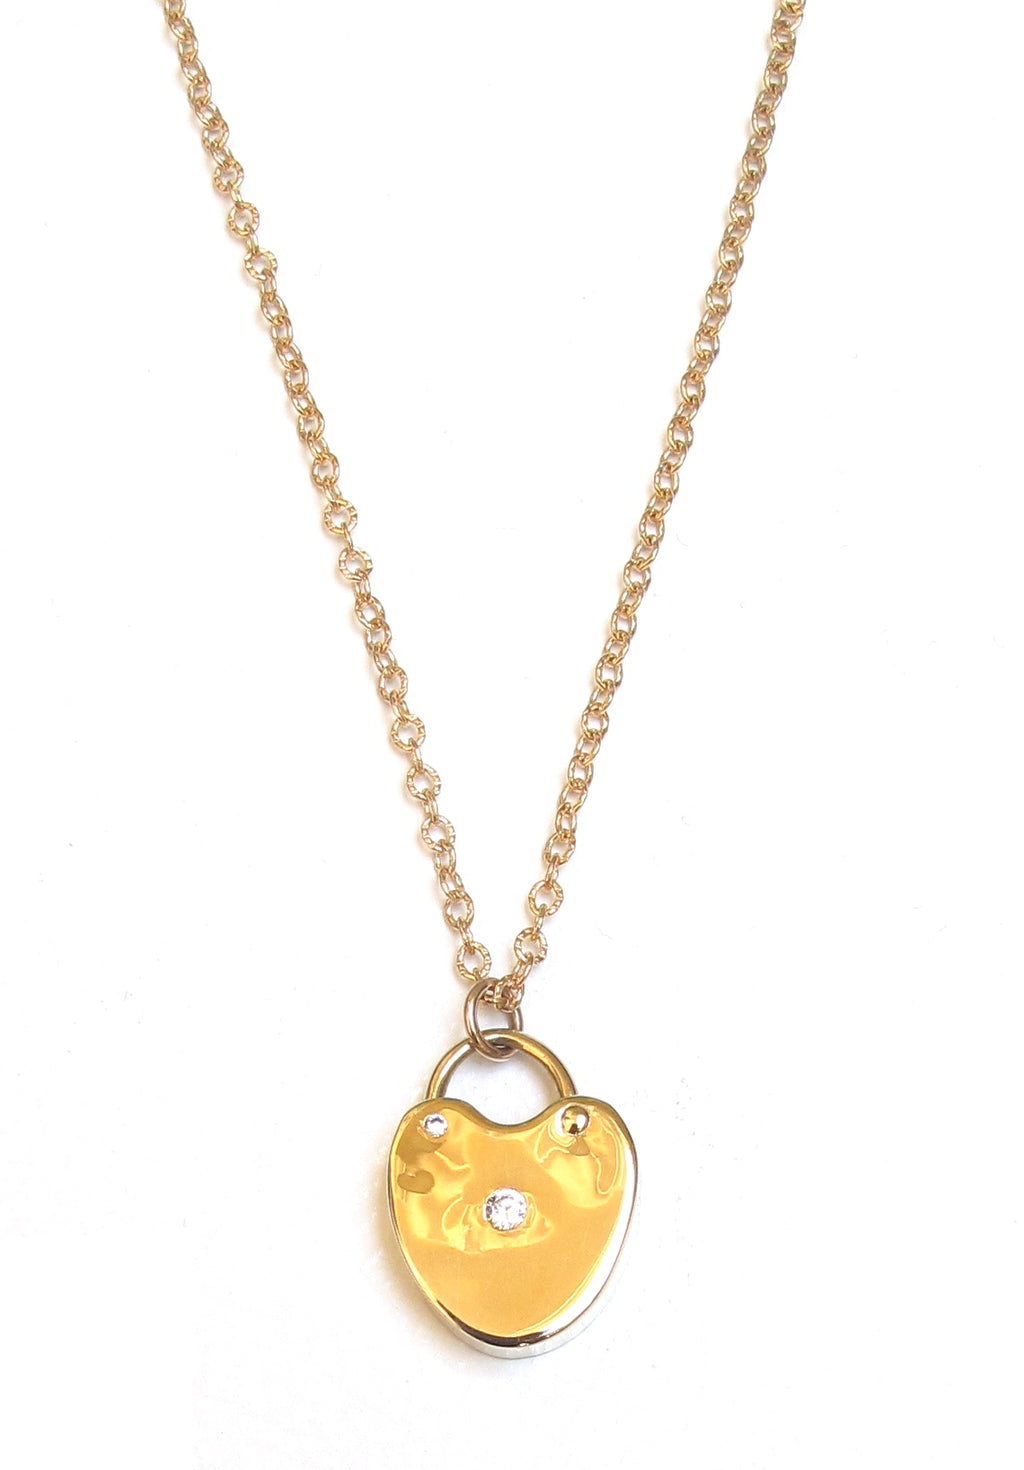 Heart Lock pendant necklace